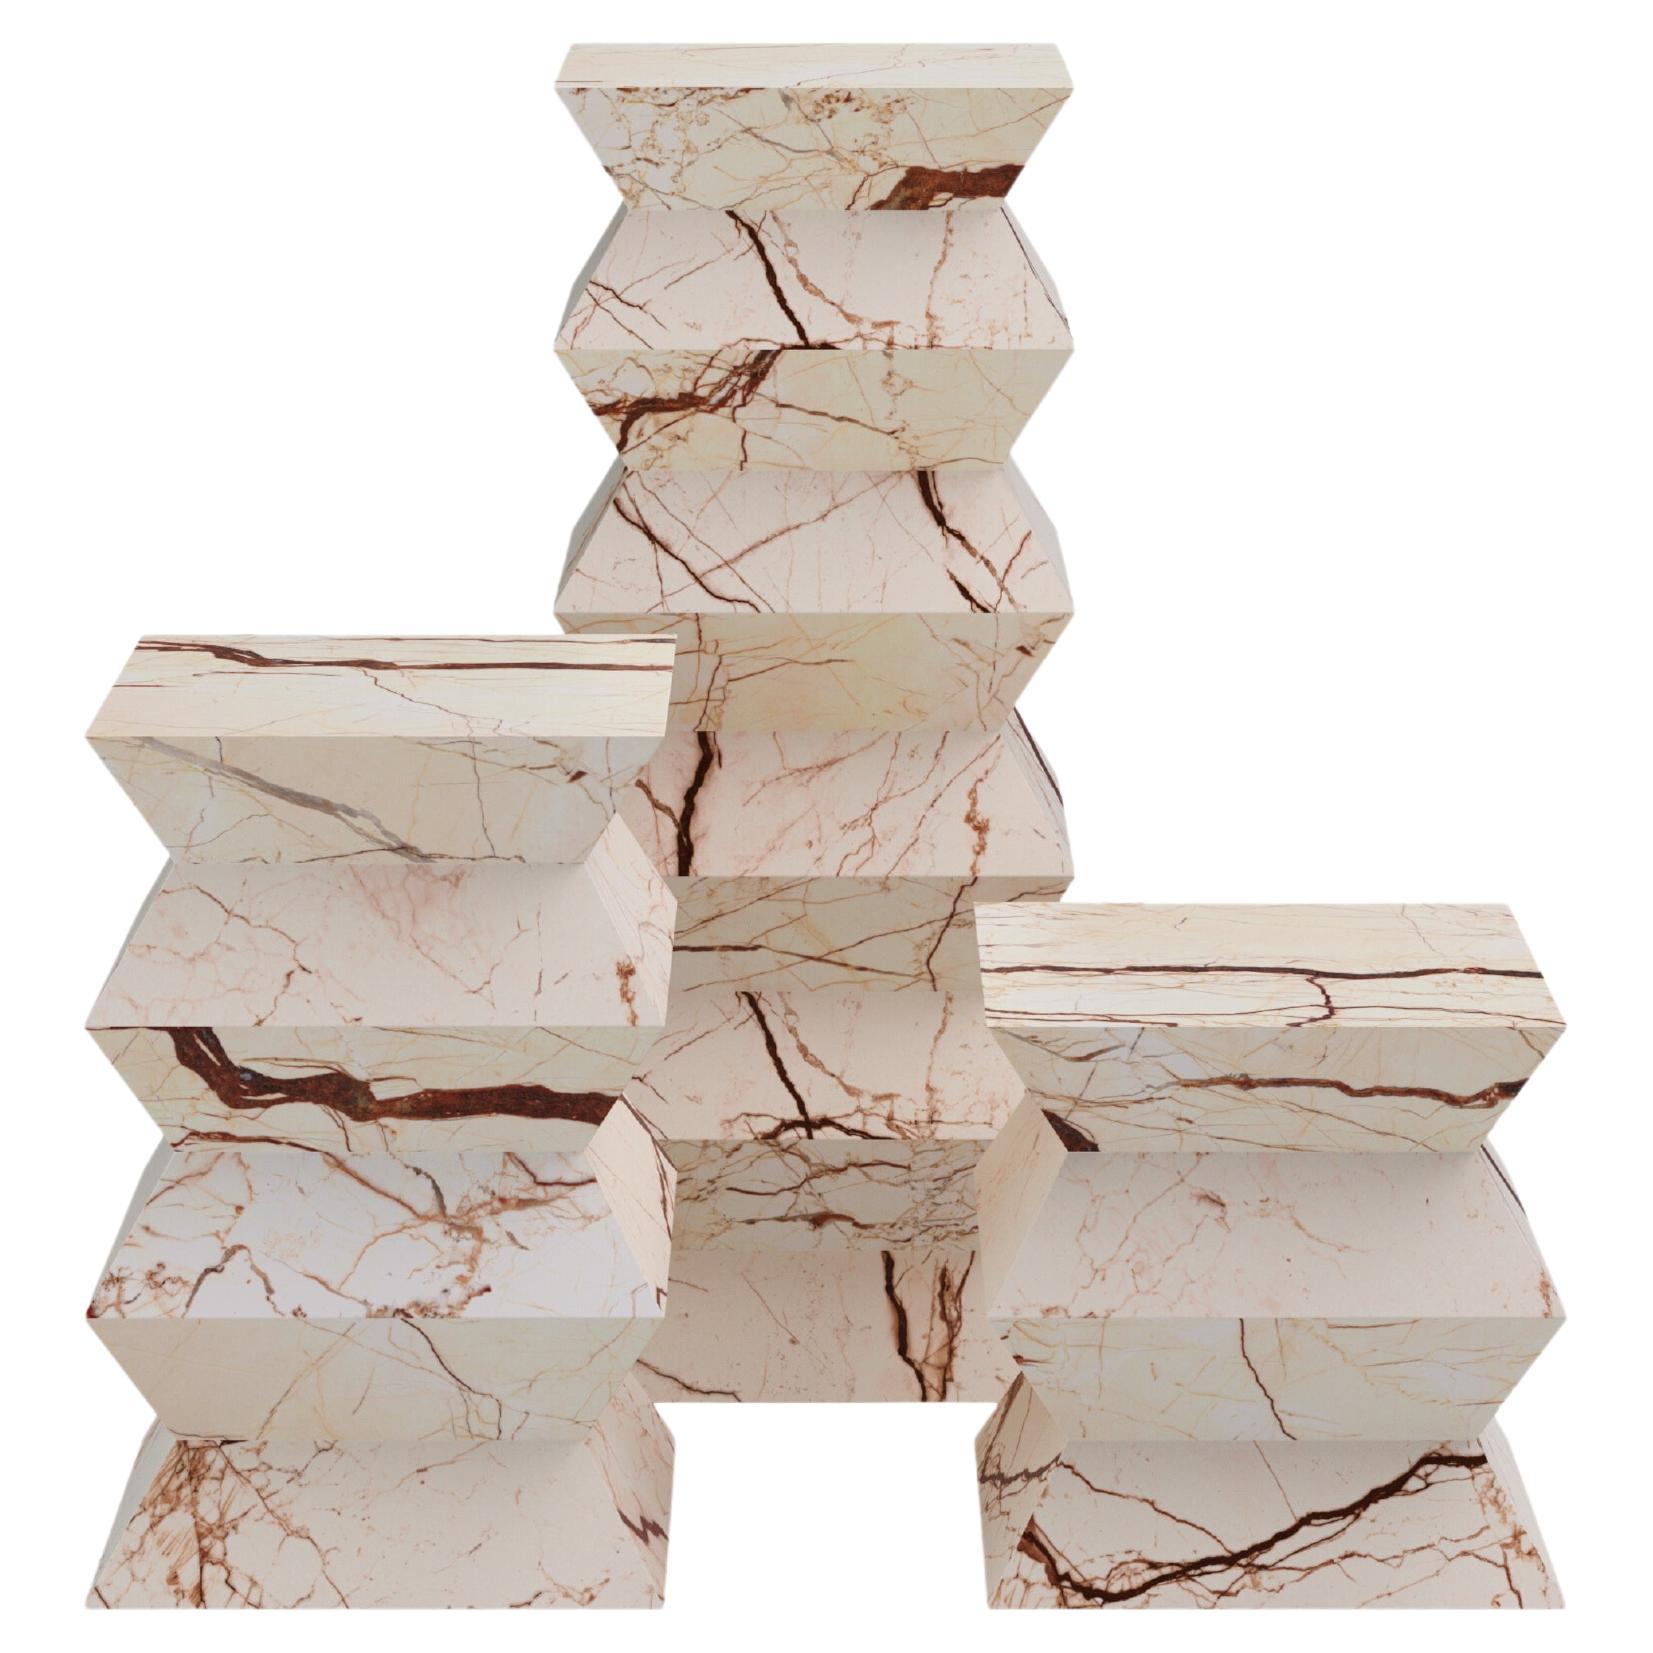 FORM(LA) Grinza Pedestal 16"L x 16"W x 40"H Sofita marbre beige en vente